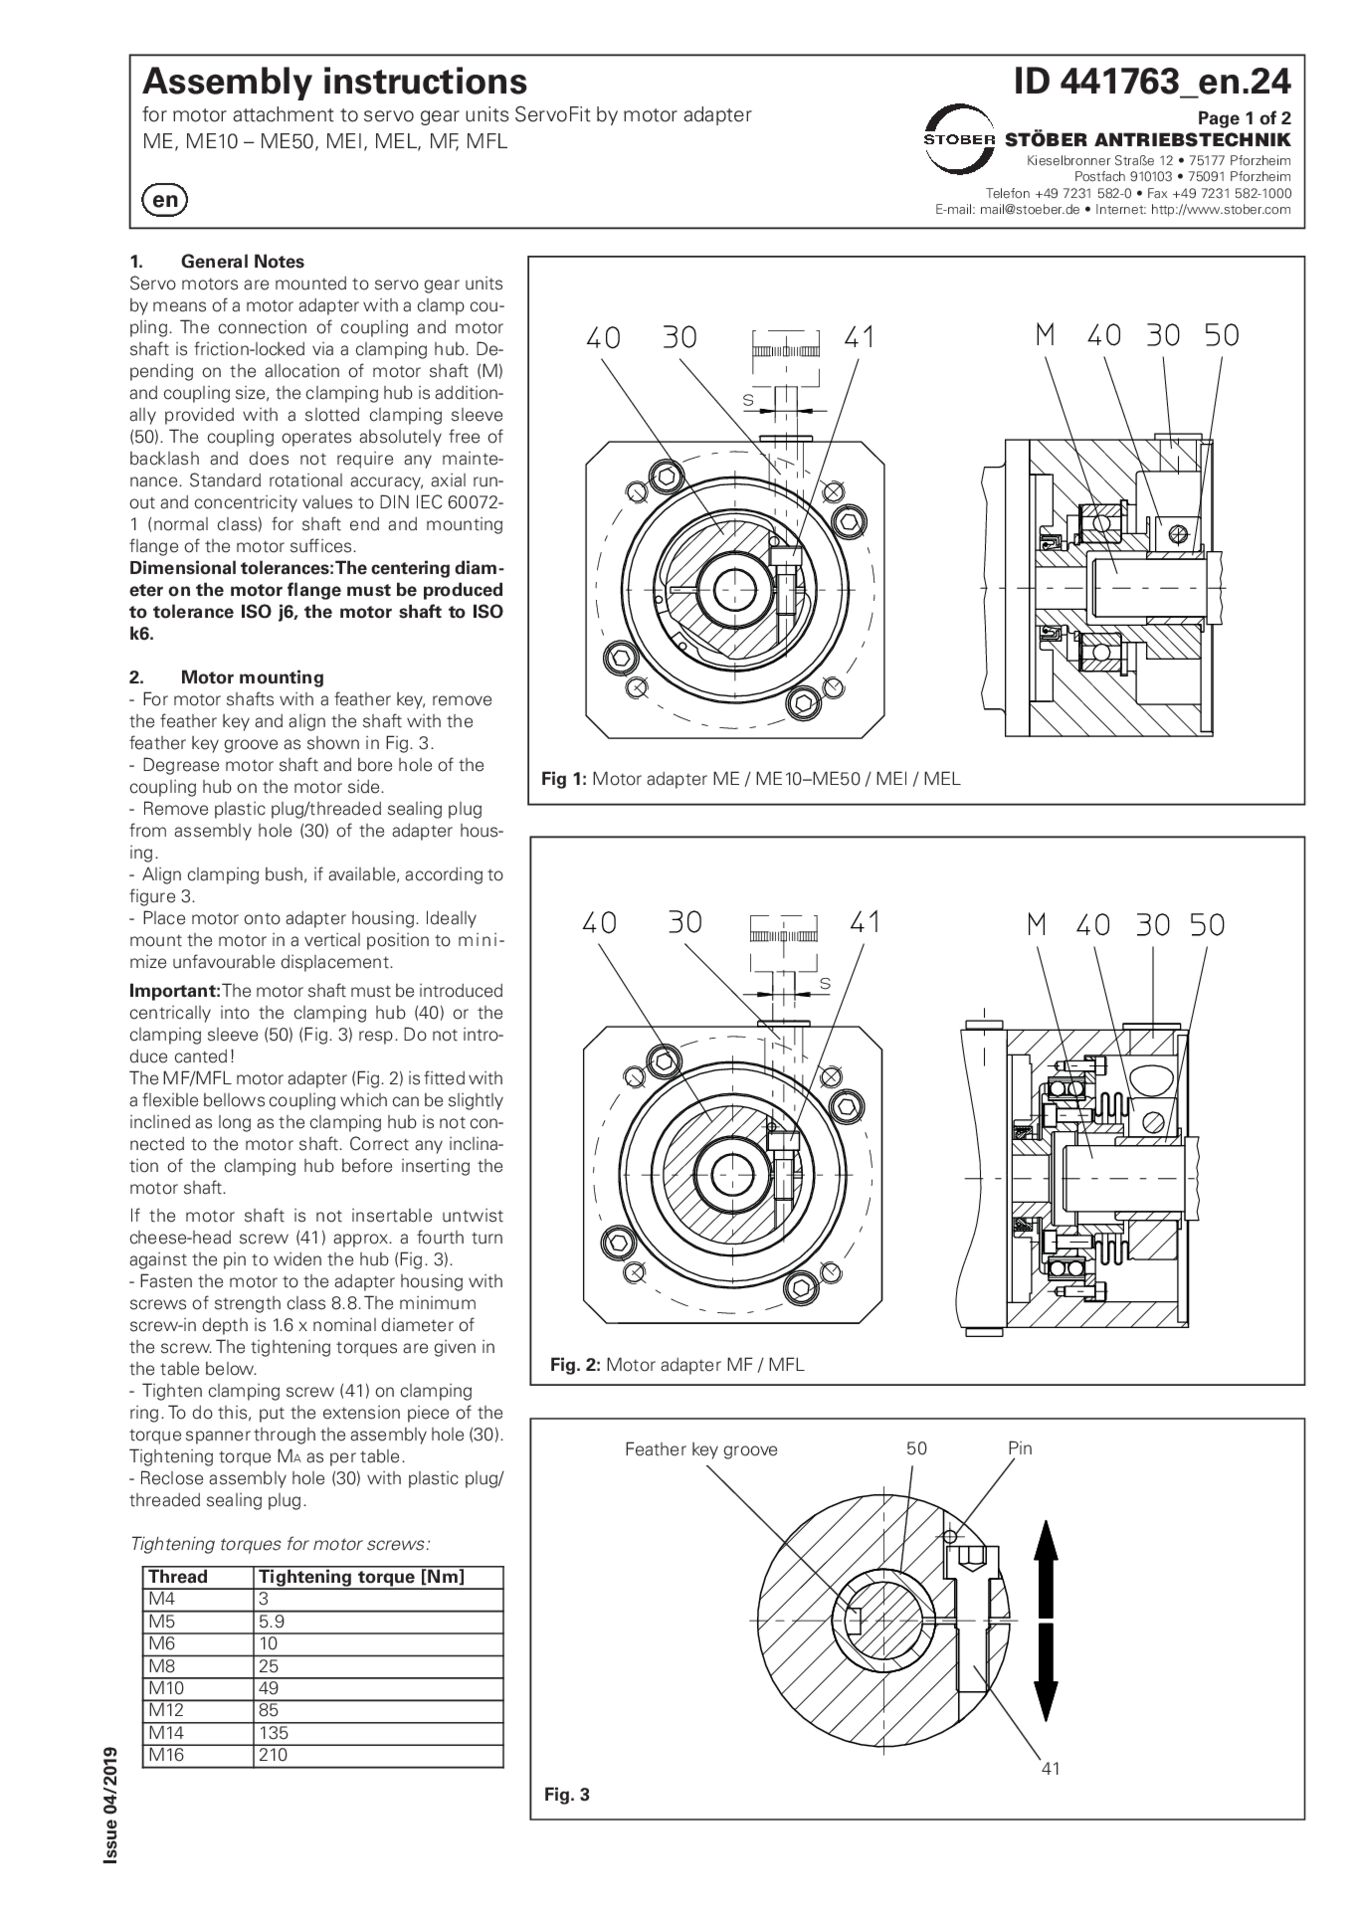 Mounting instructions Motor attachment to servo gear units by ME MF MEI MEL MFL